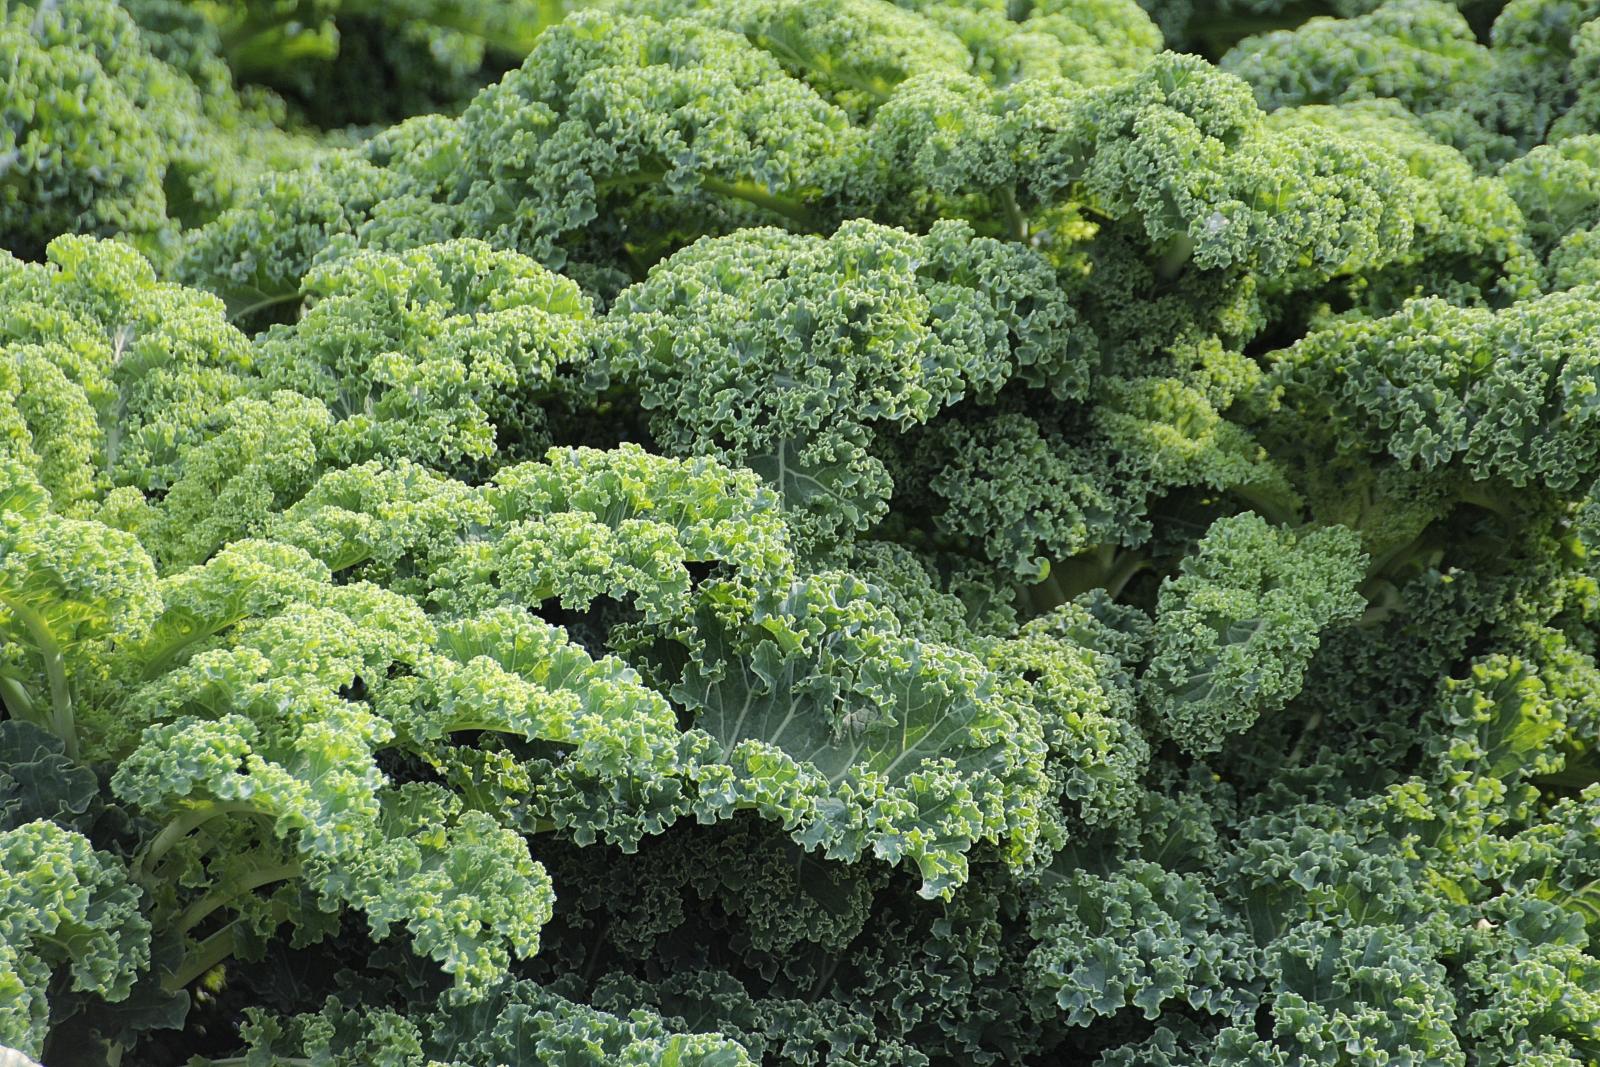 Kale. Photo credit: Pexels